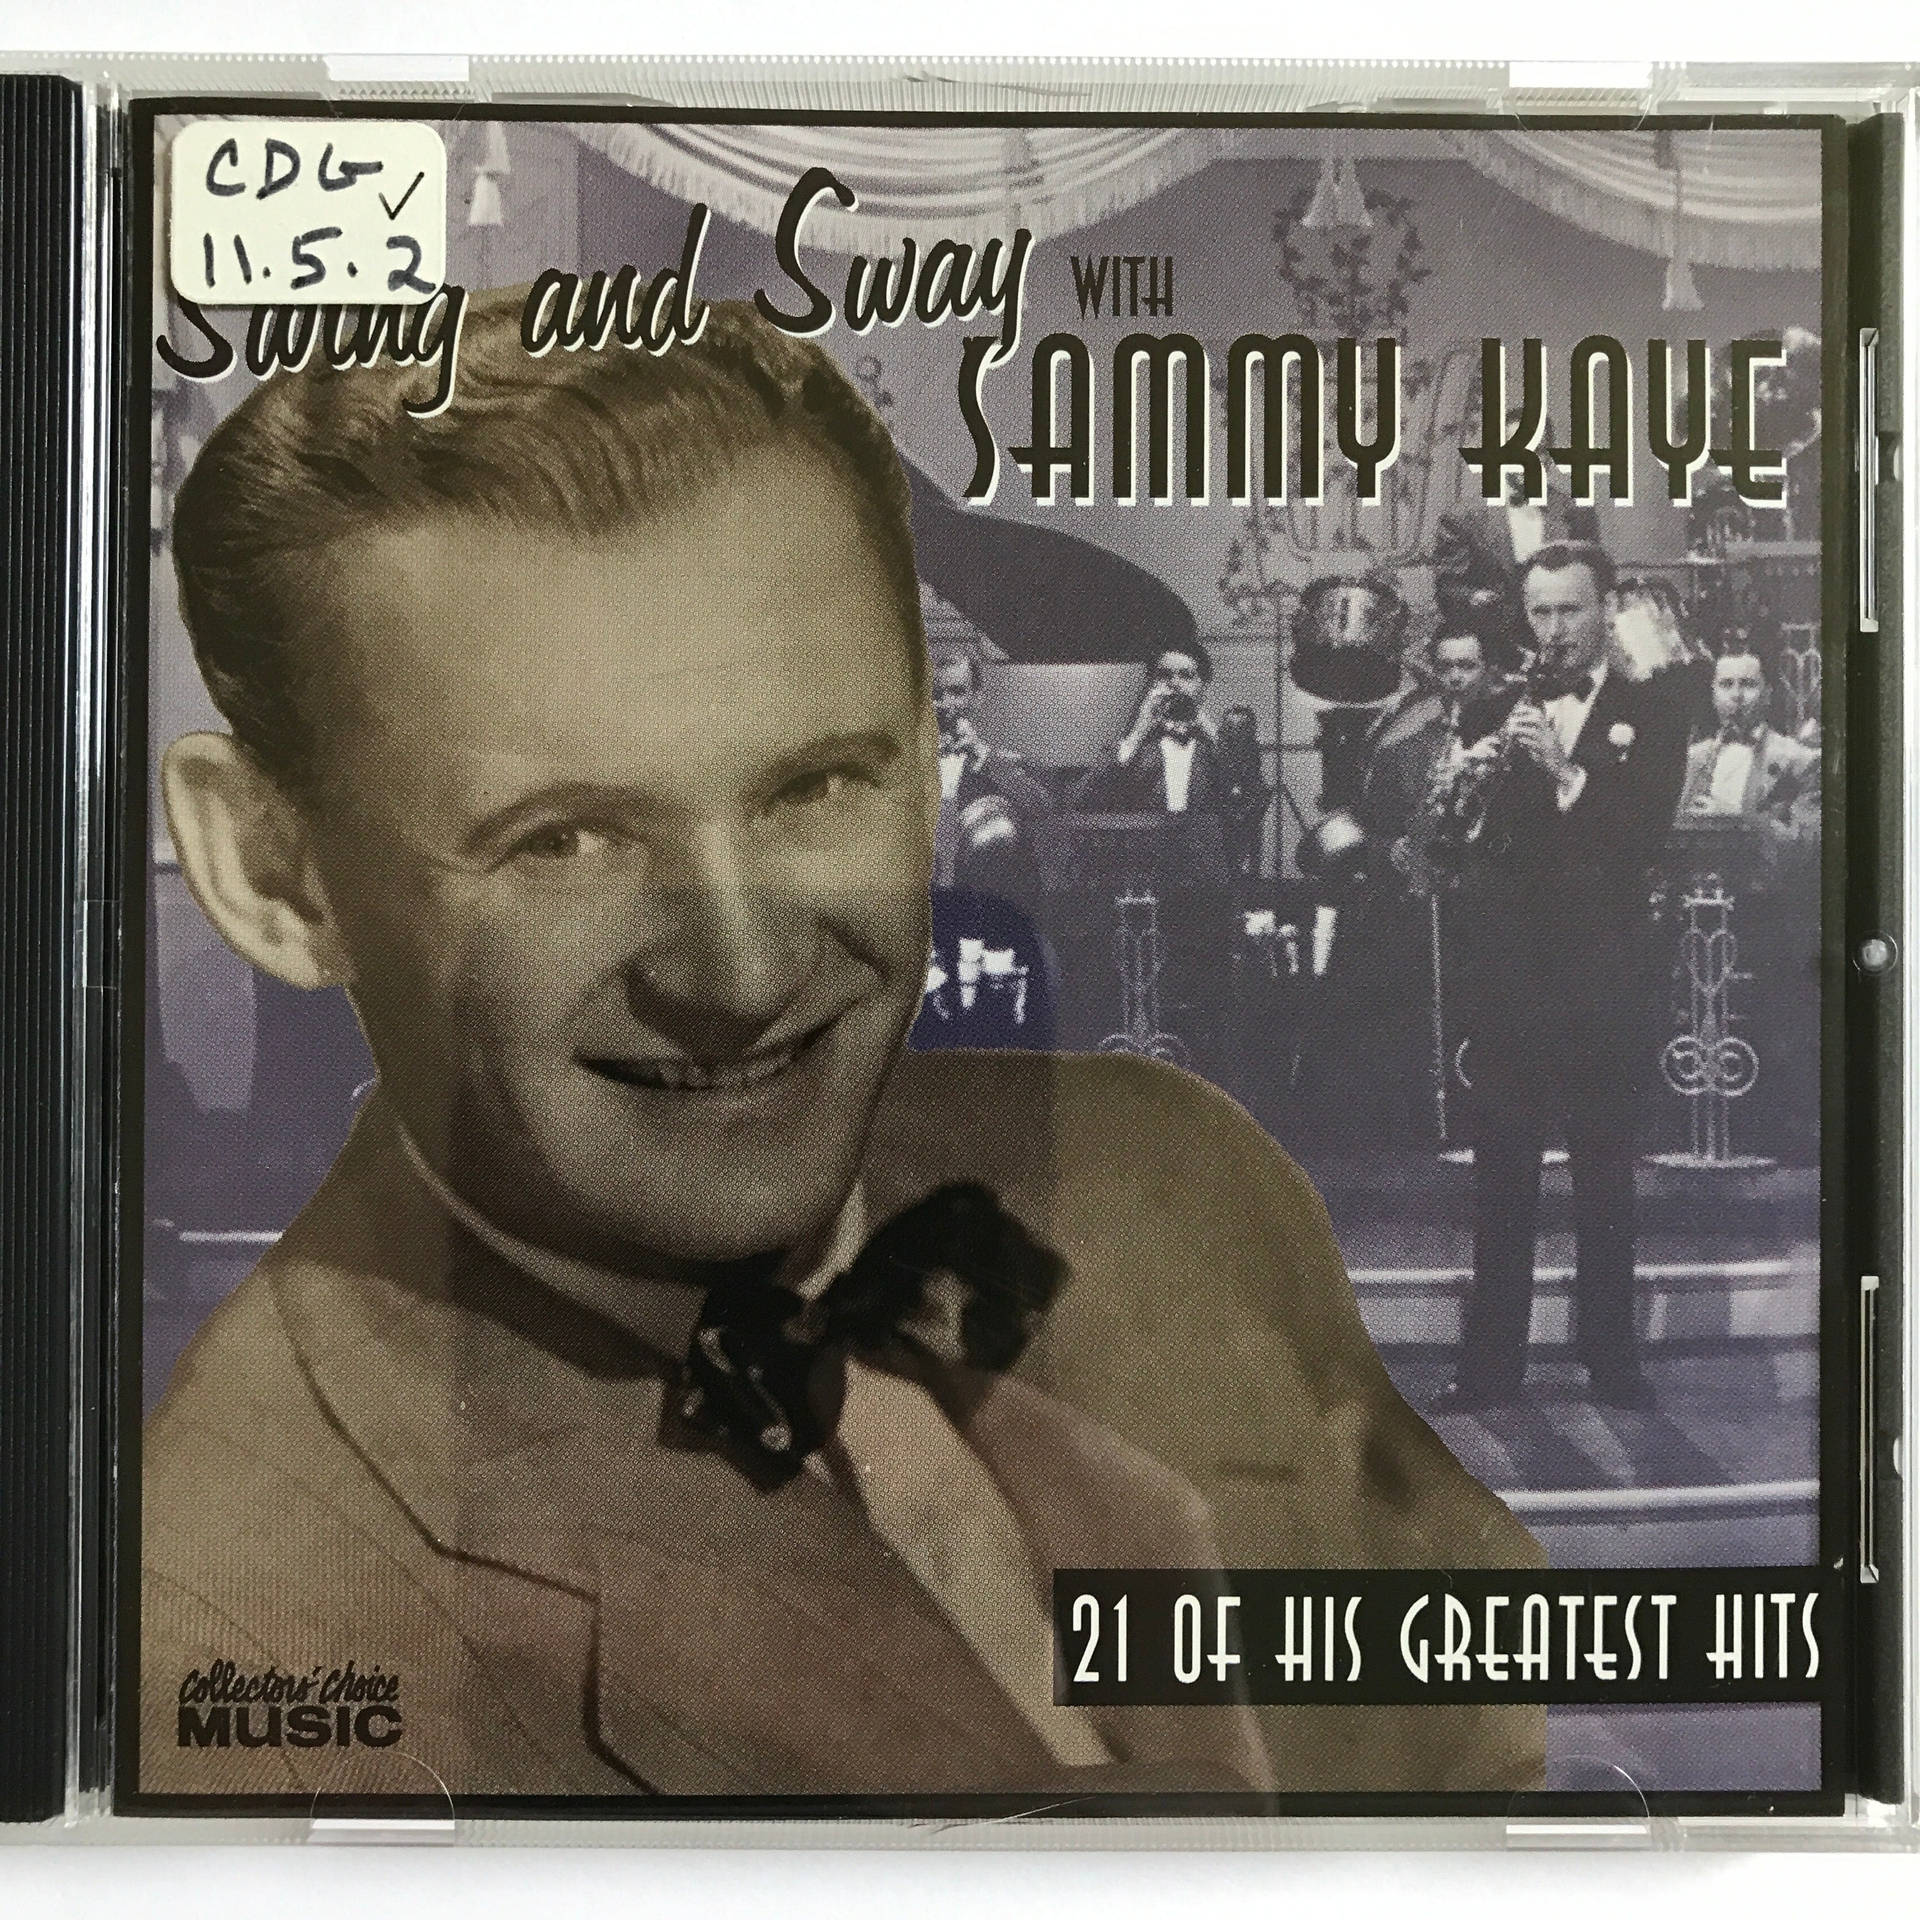 Sammykaye Größte Hits Cd Album Wallpaper